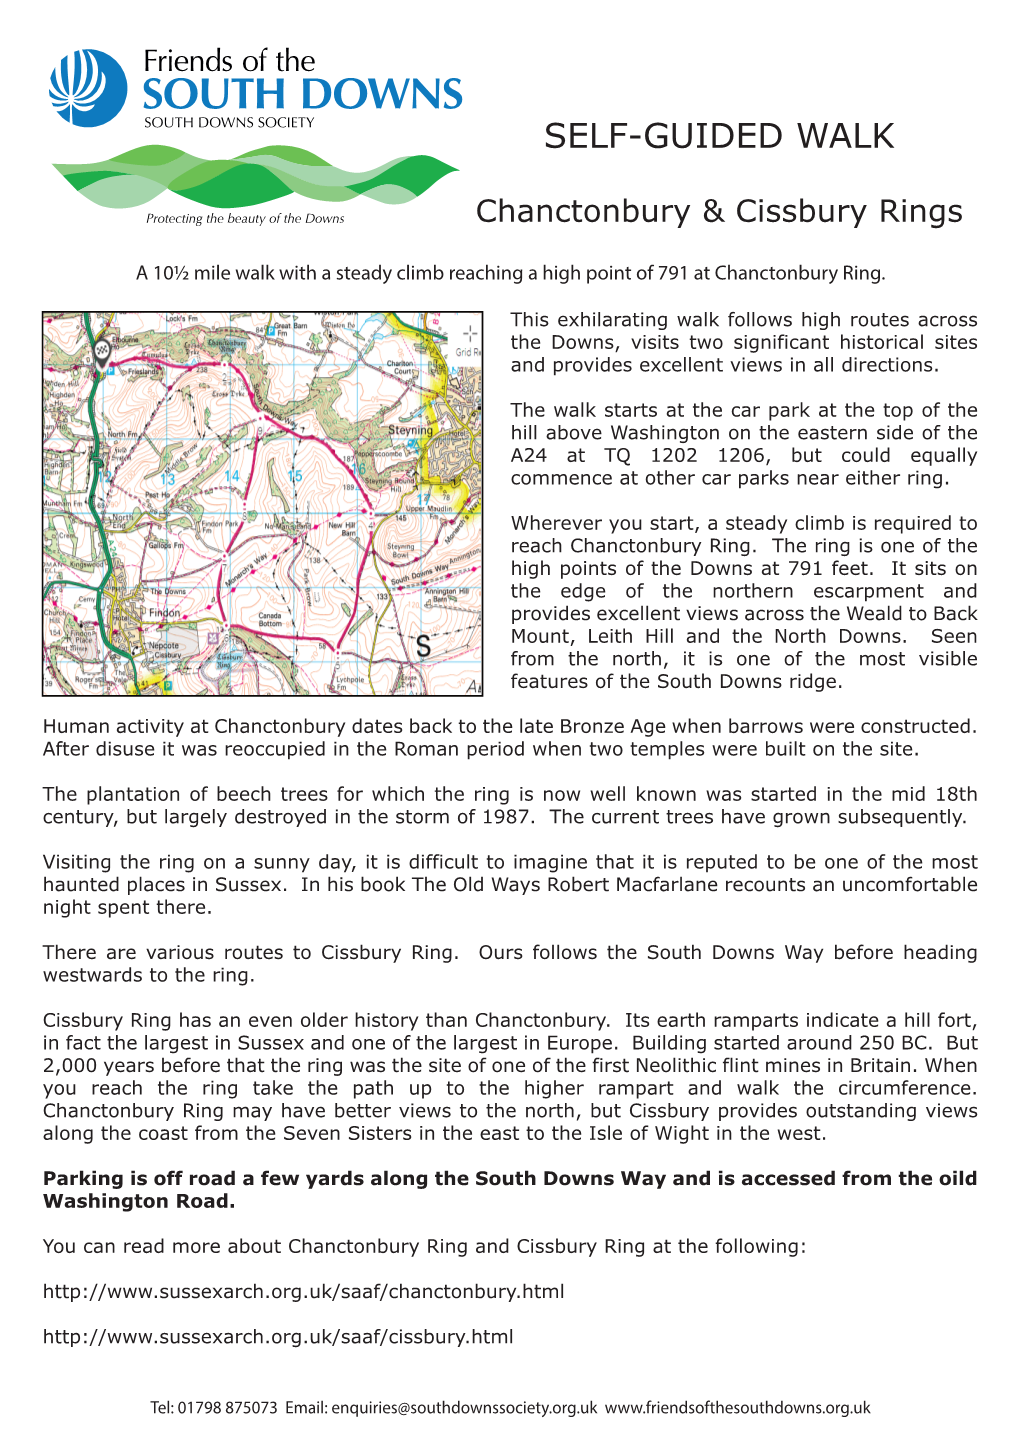 Chanctonbury and Cissbury Rings